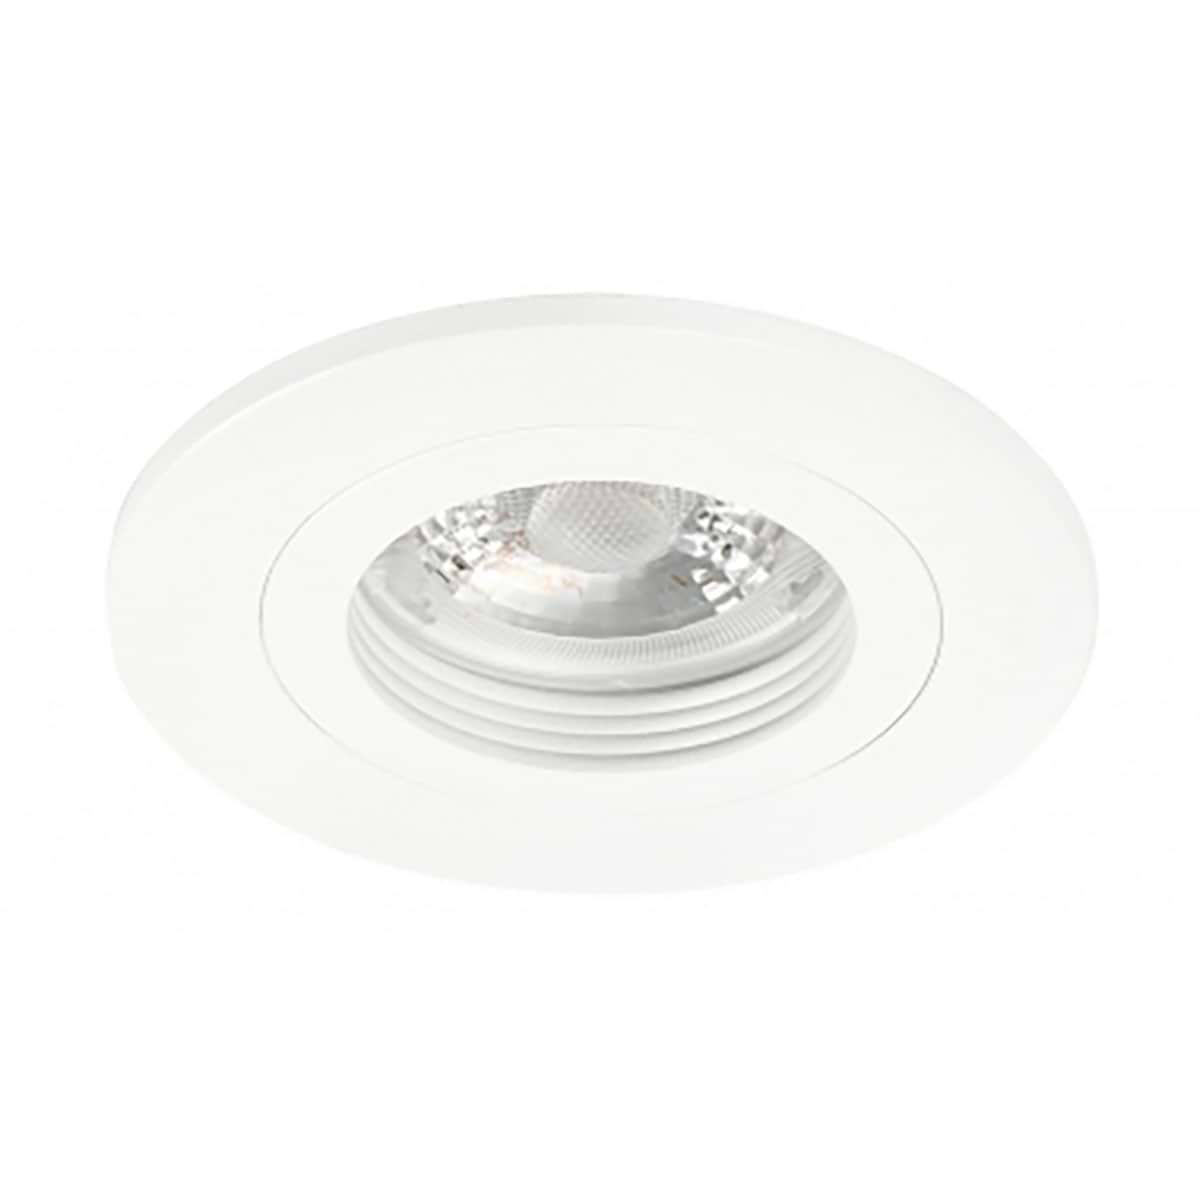 Fix inbouwspot mat wit, mm, inclusief lamphouder voor GU10 LED lichtbron, HIGH LIGHT - S781500 - Webo Verlichting